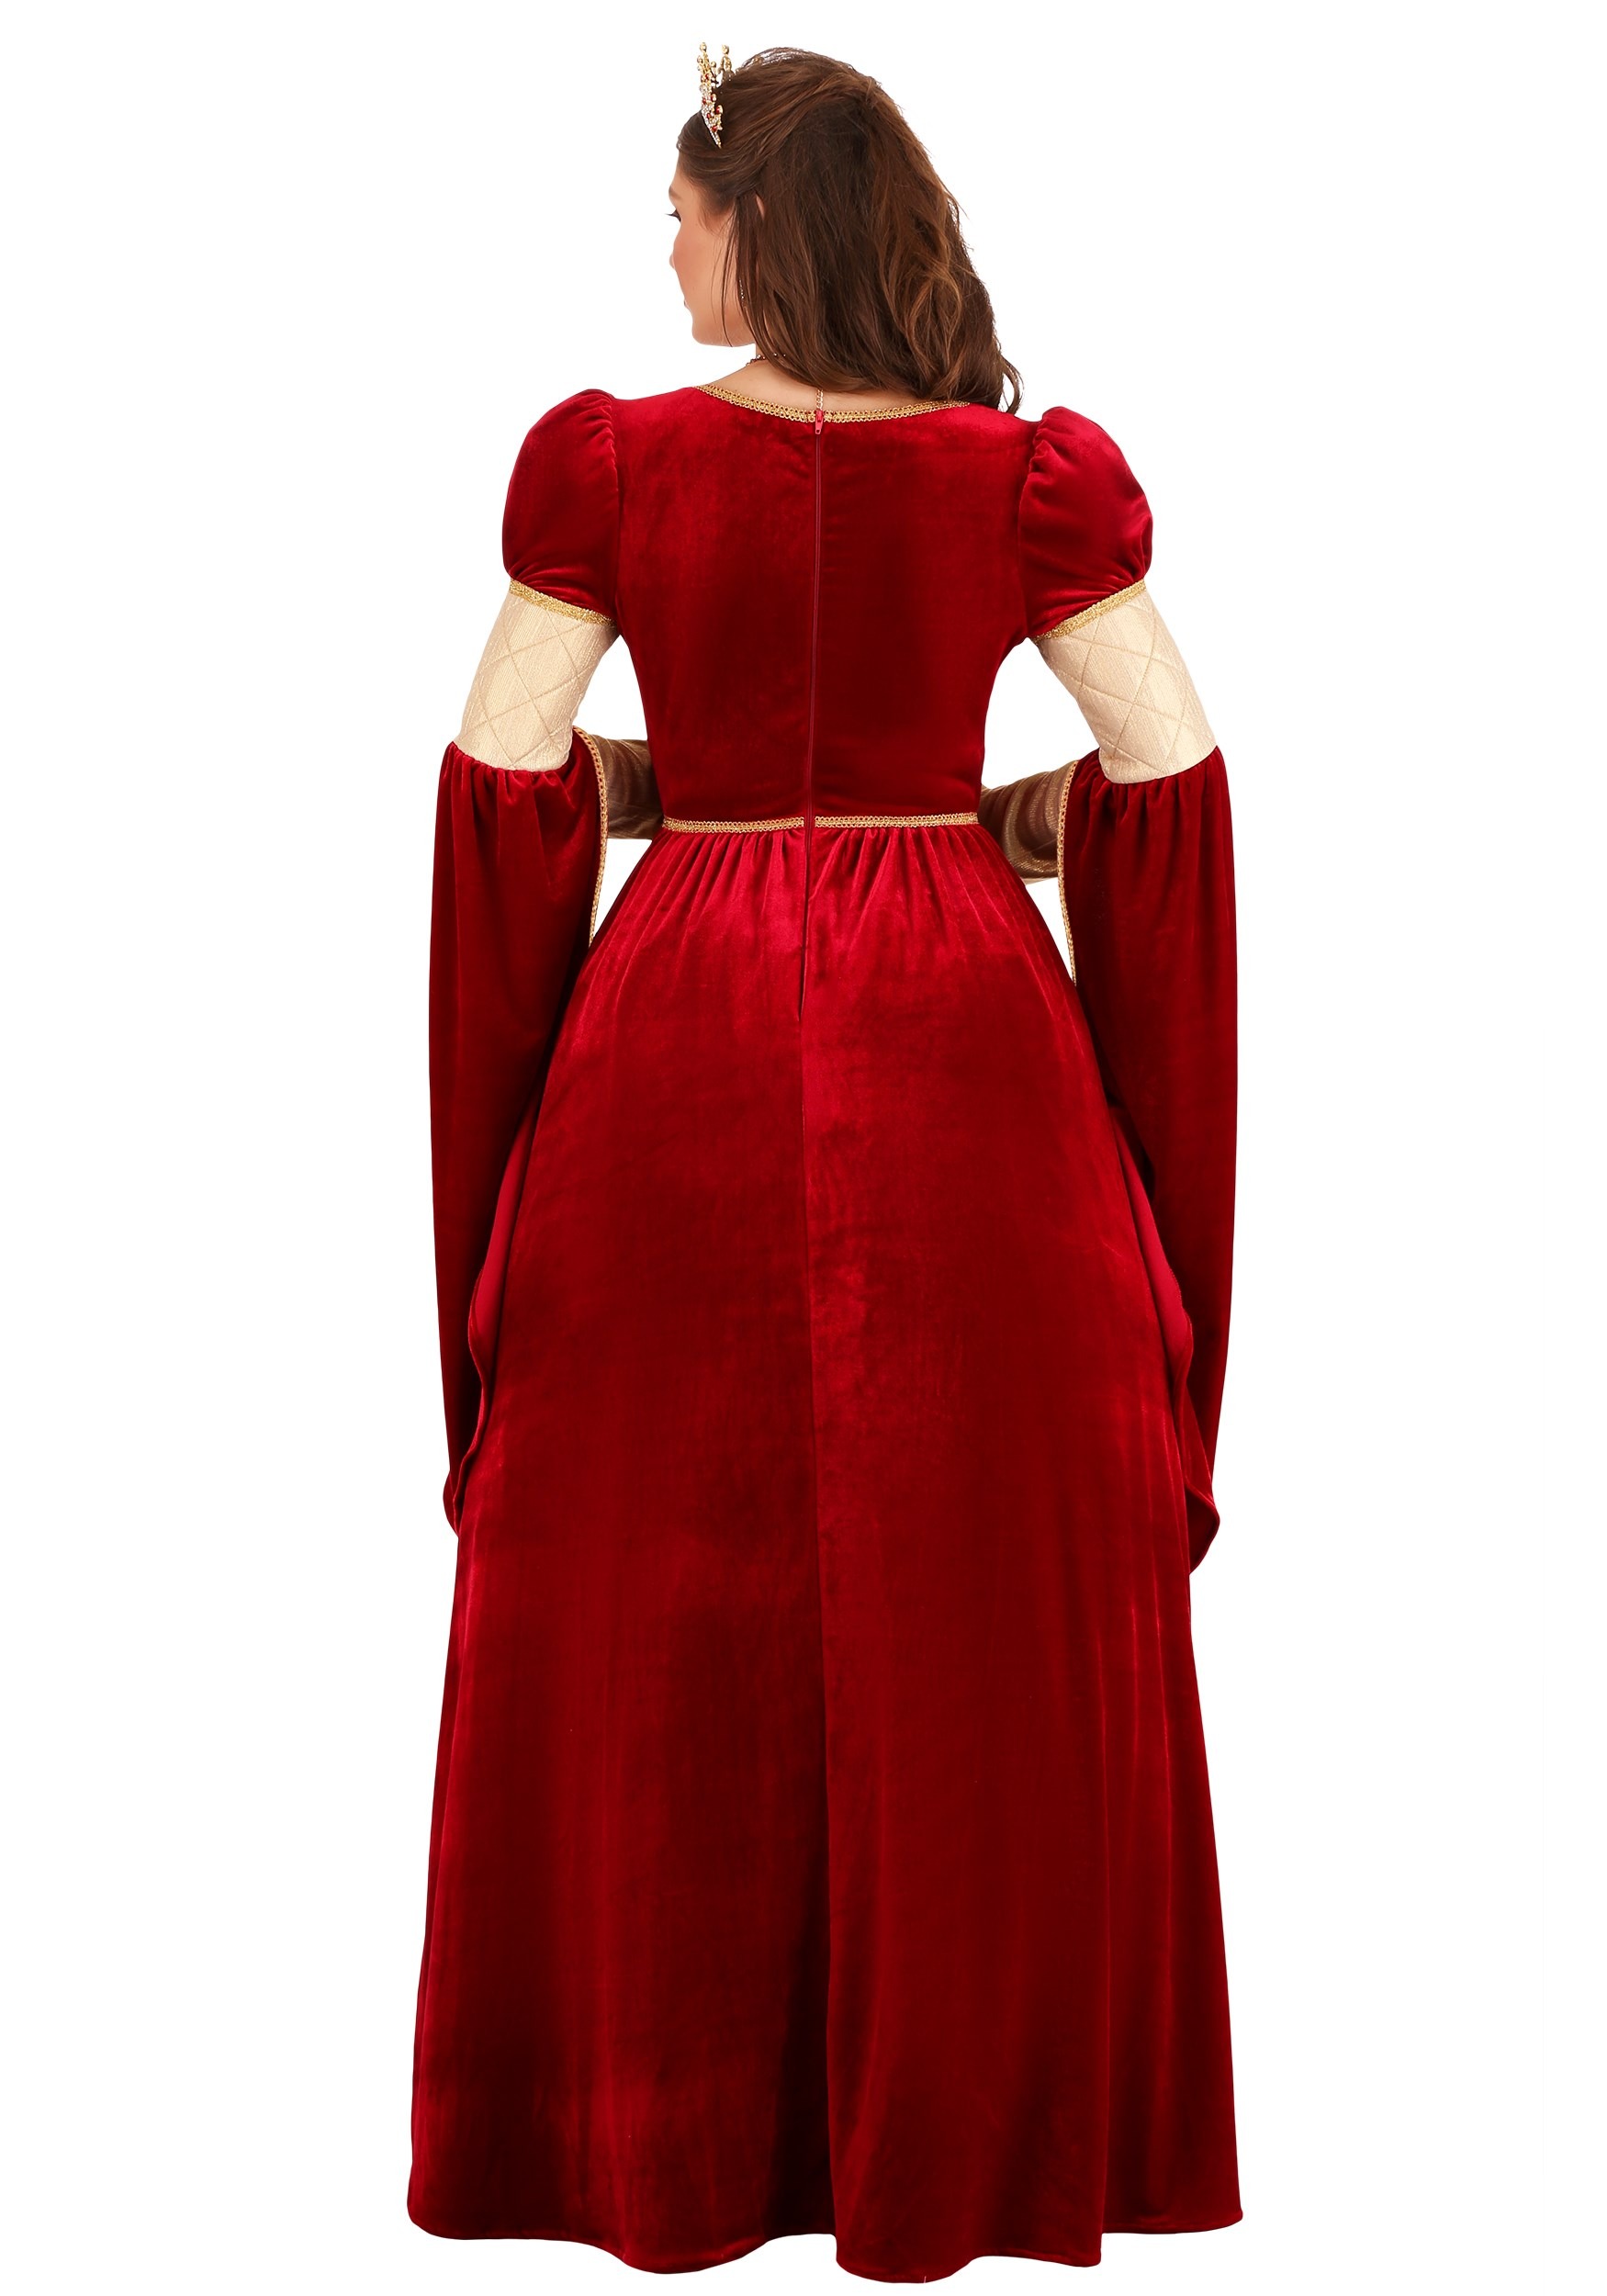 Regal Renaissance Queen Women's Fancy Dress Costume